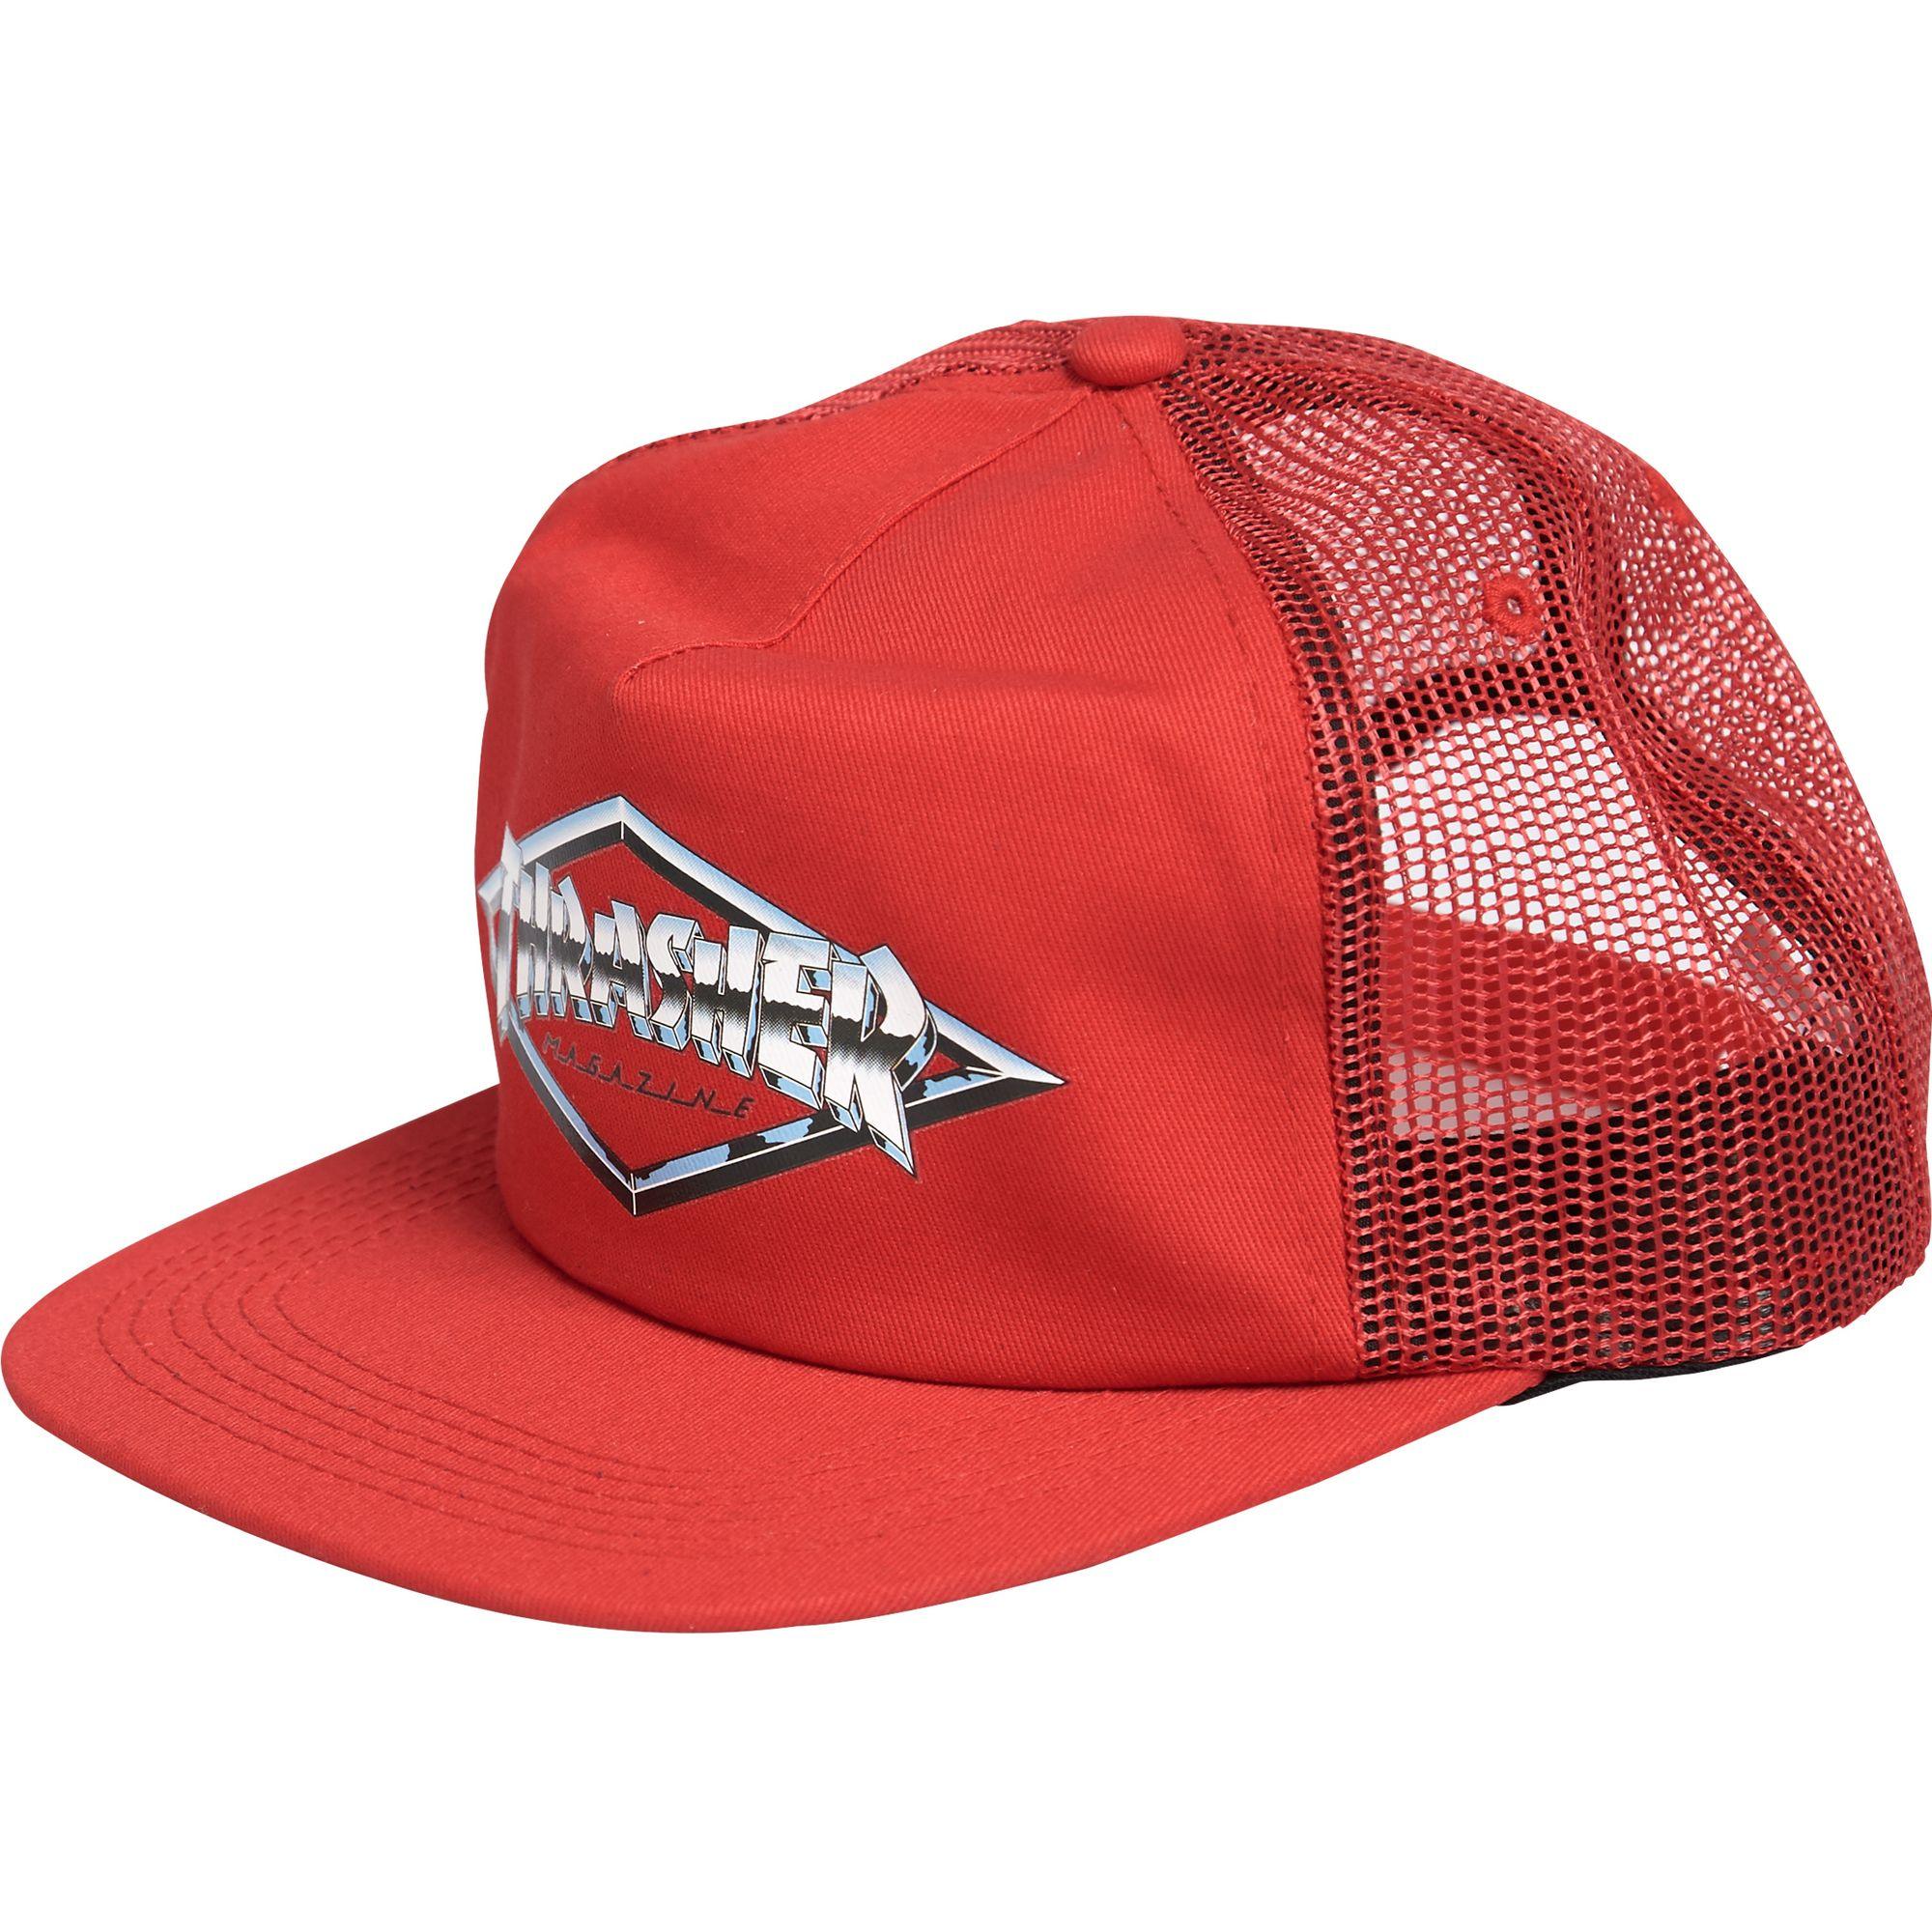 Two Red Diamond Logo - Two Seasons Emblem Trucker Cap